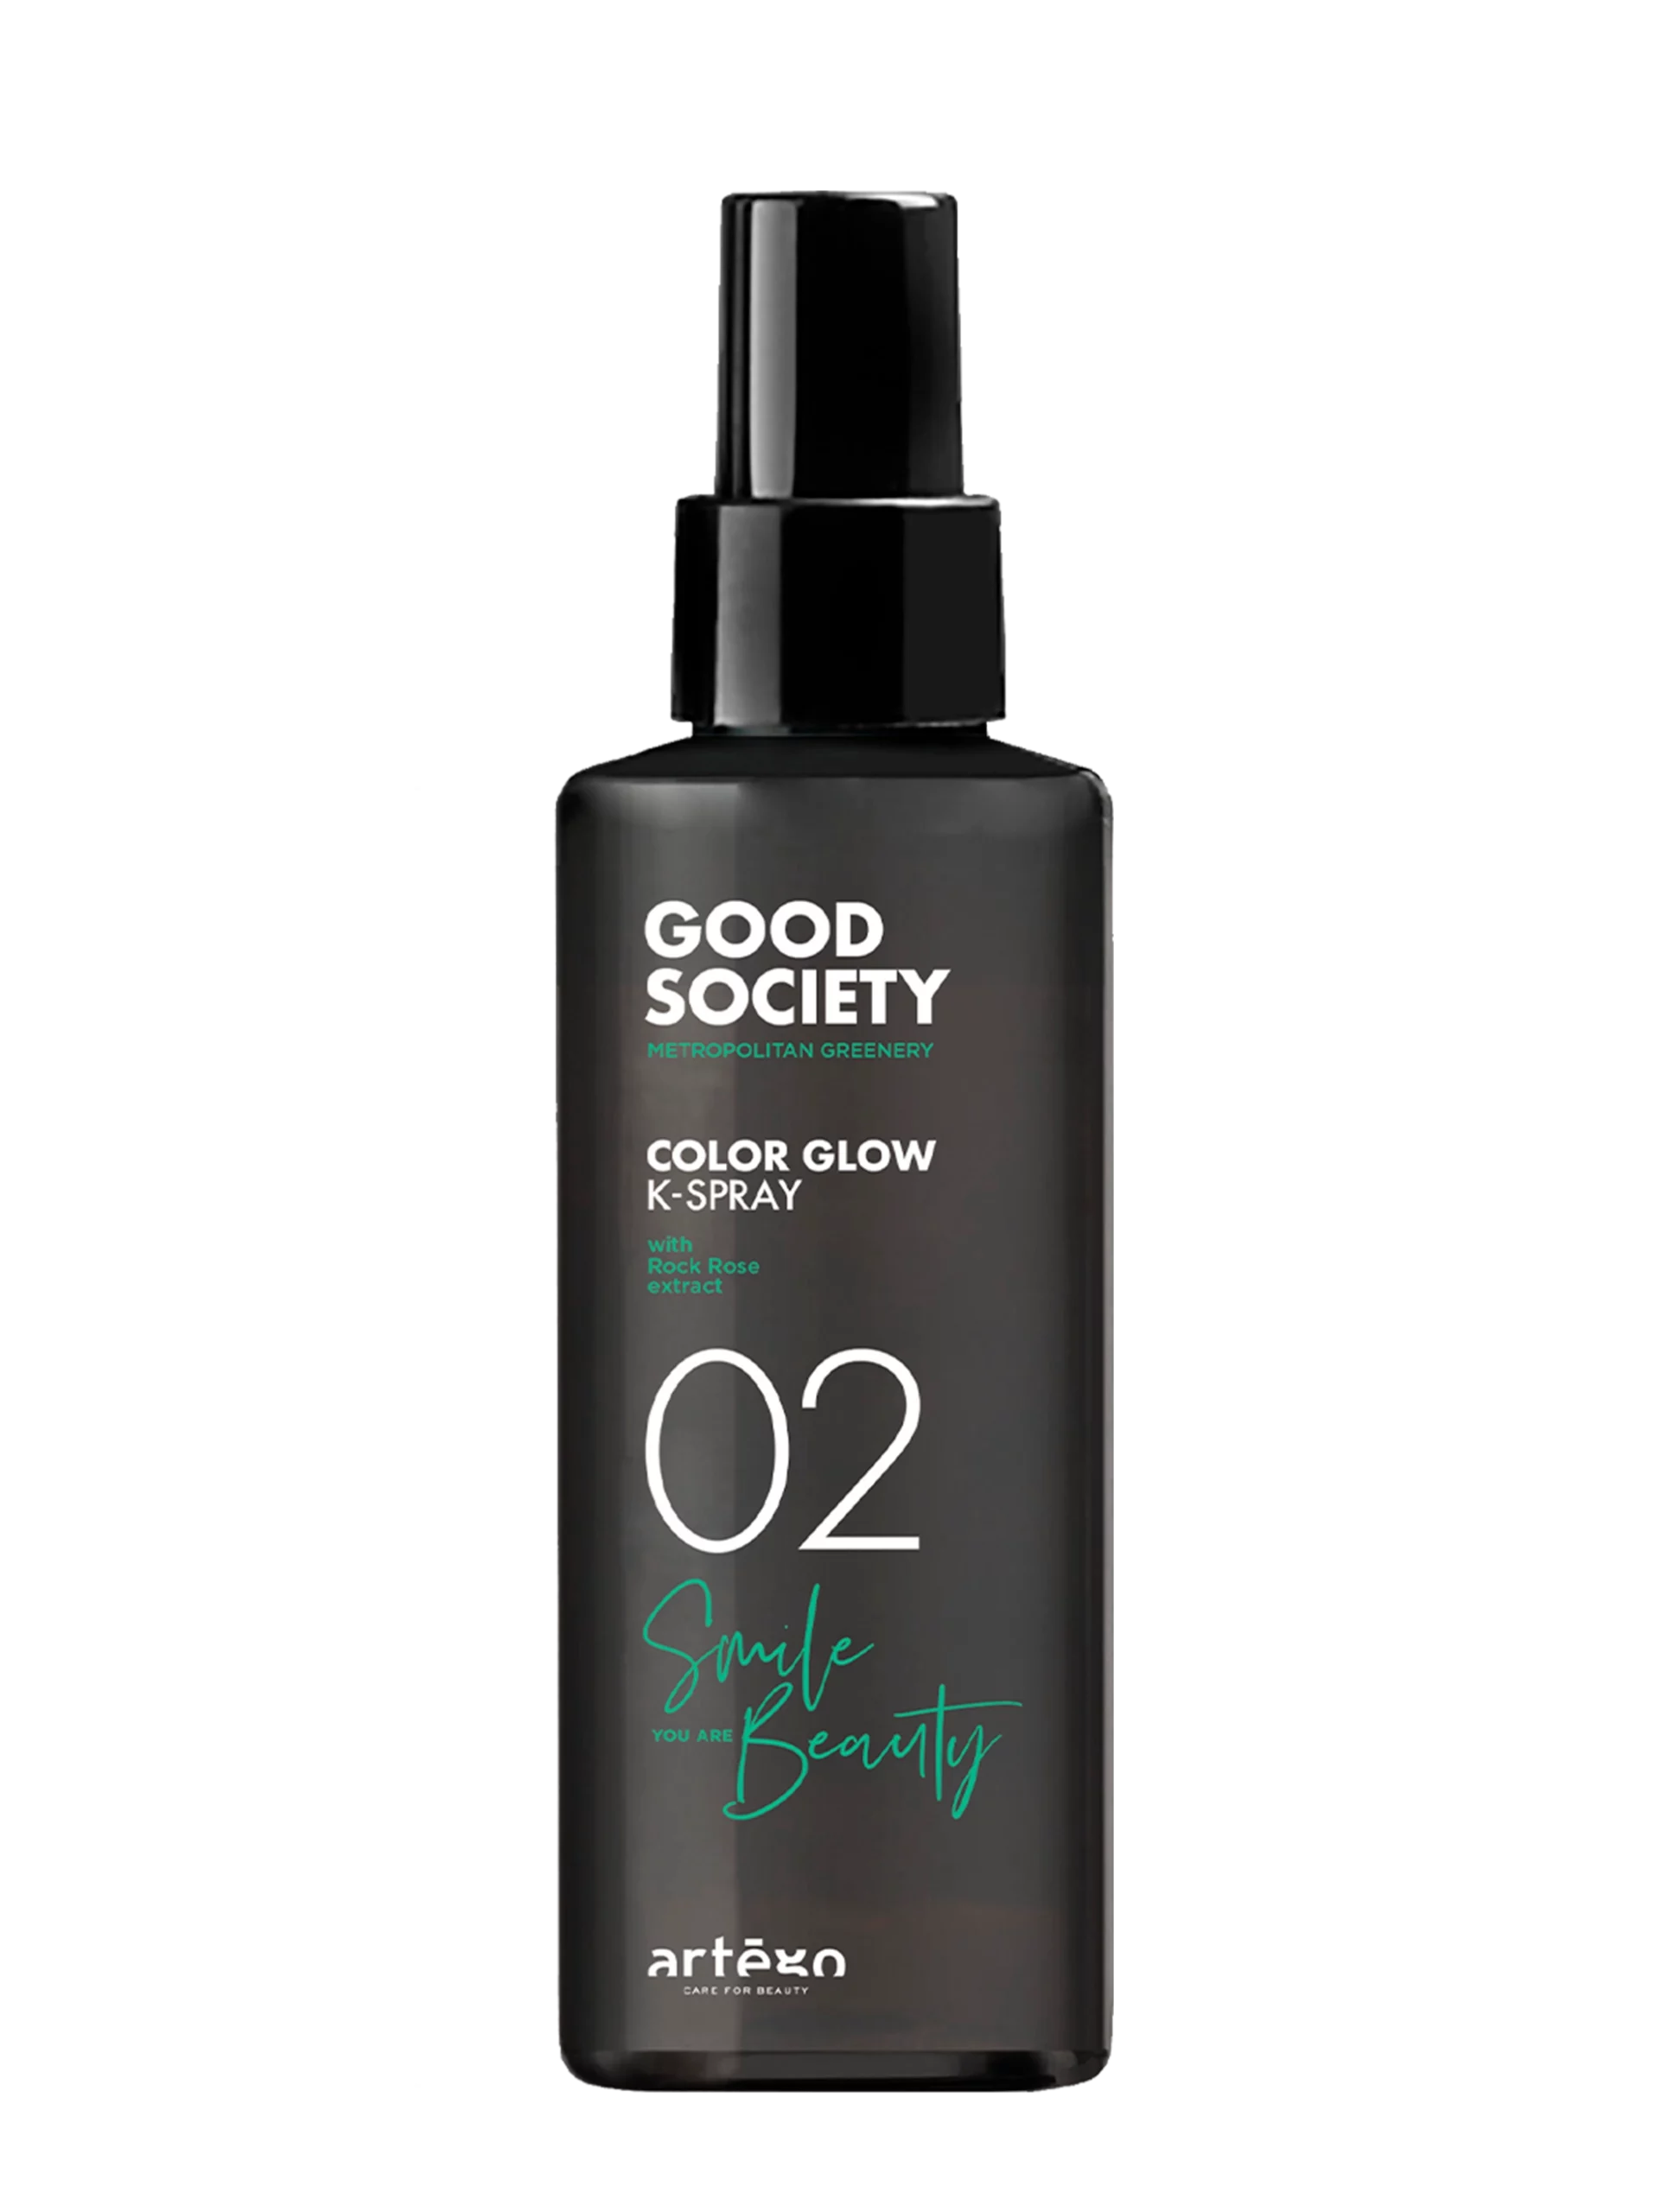 02-Good-Society-Color-Glow-K-Spray